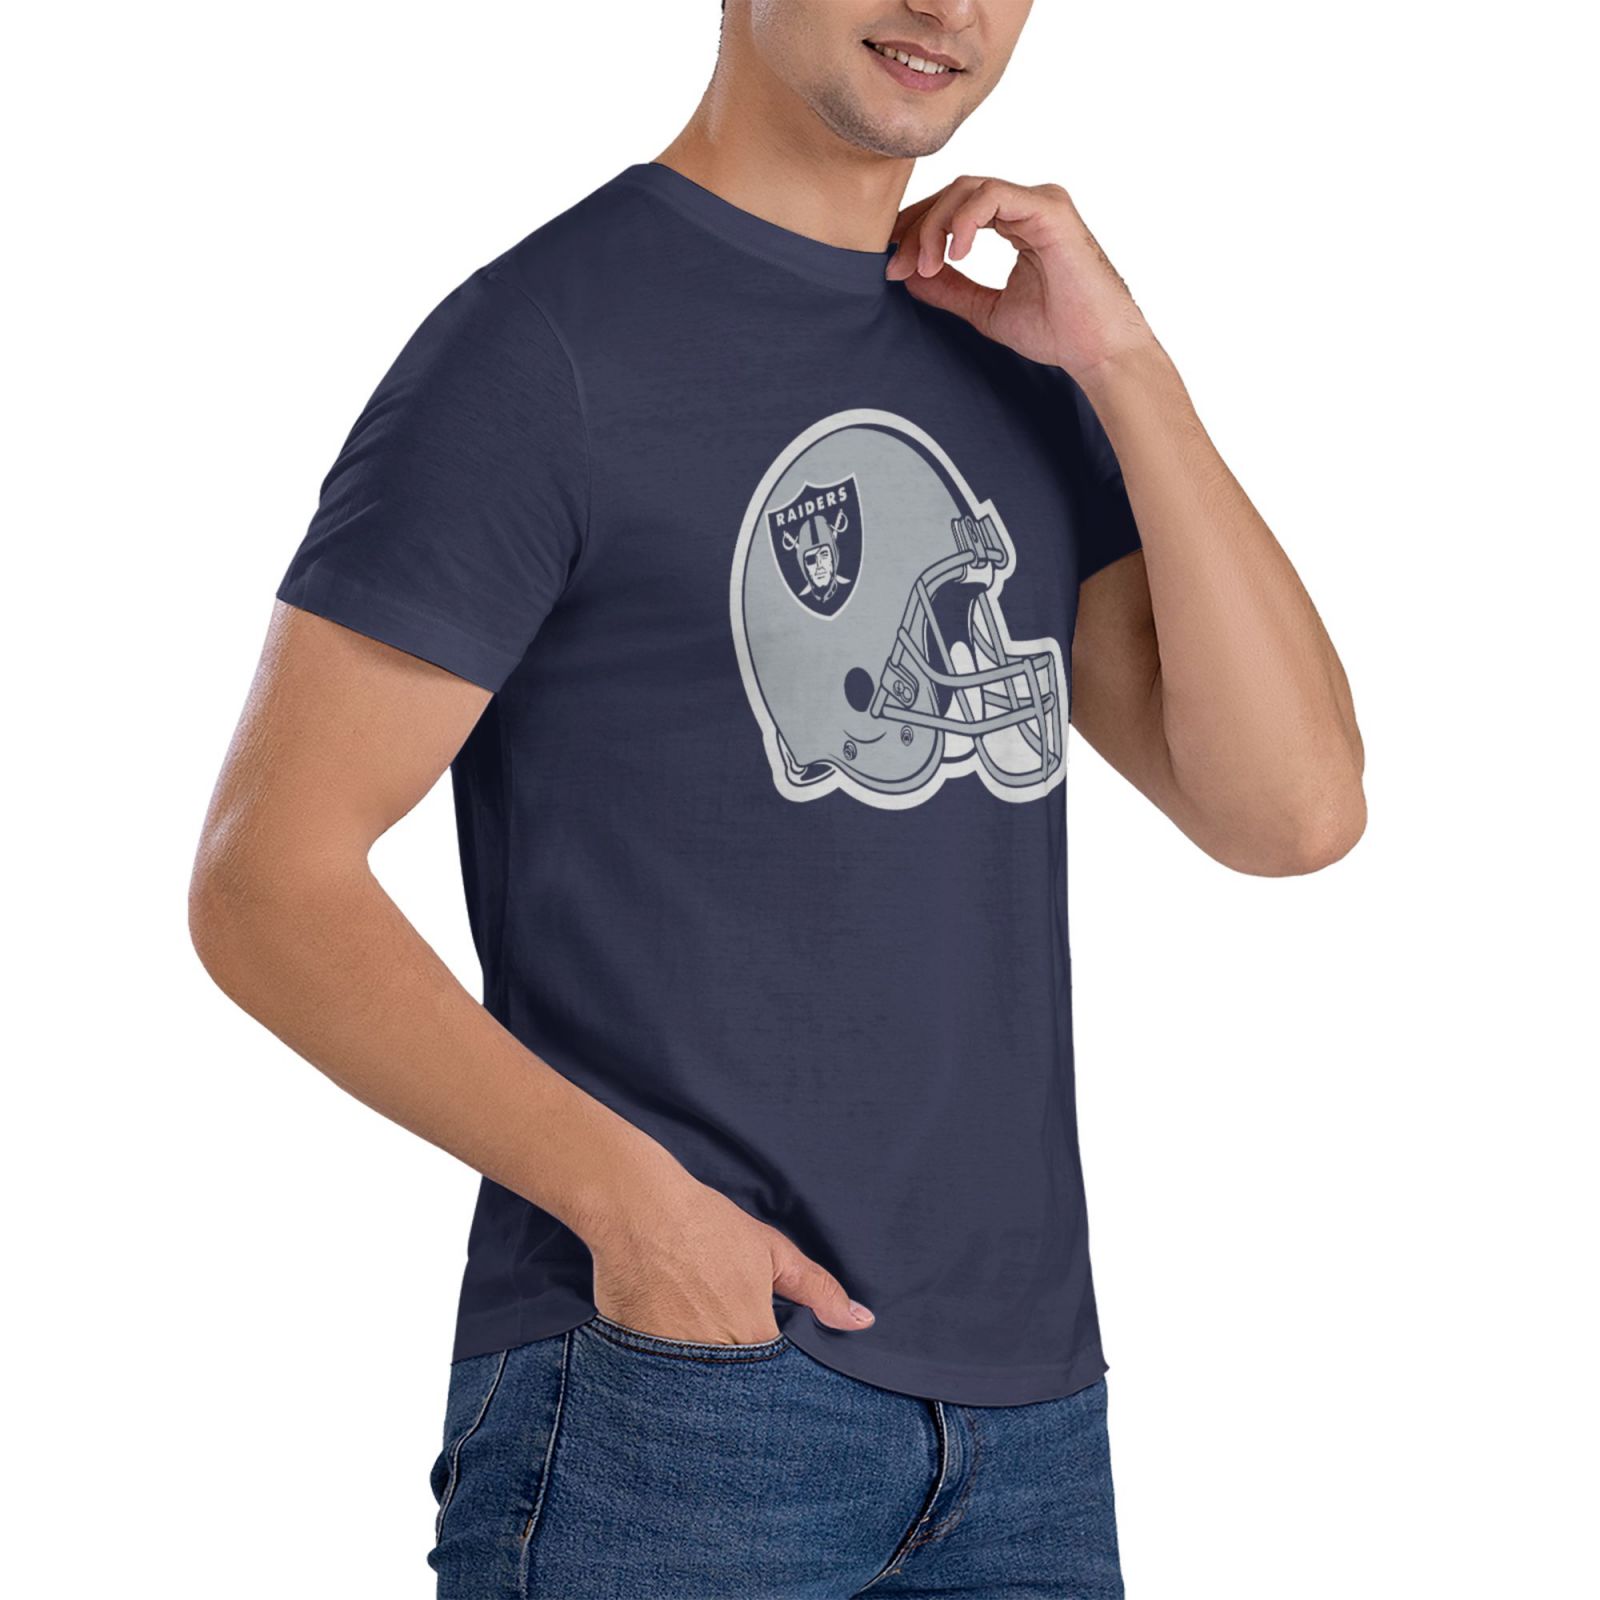 Las-Vegas-Raiders Men'S Cotton, Moisture-Wicking Crew T-Shirt Adult ...